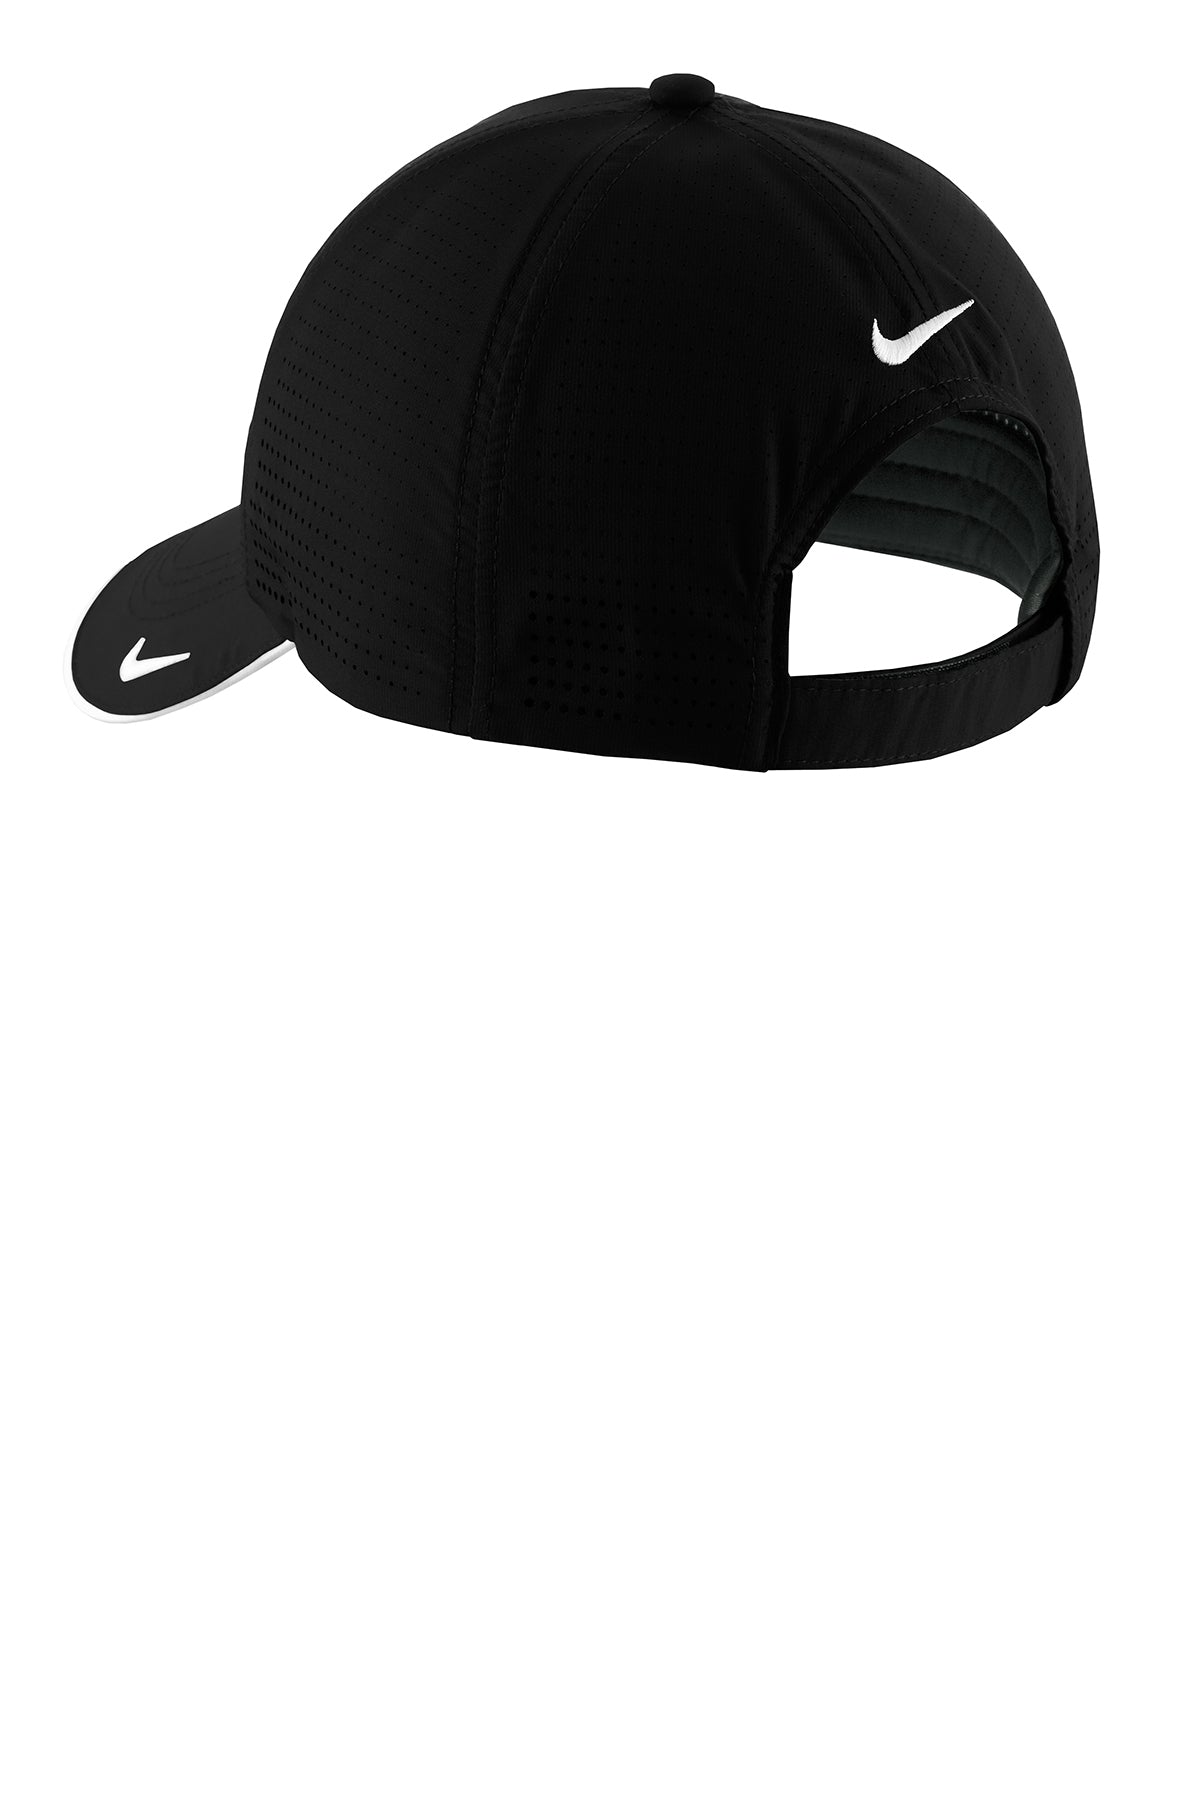 Nike Dri-FIT Swoosh Perforated Customized Caps, Black